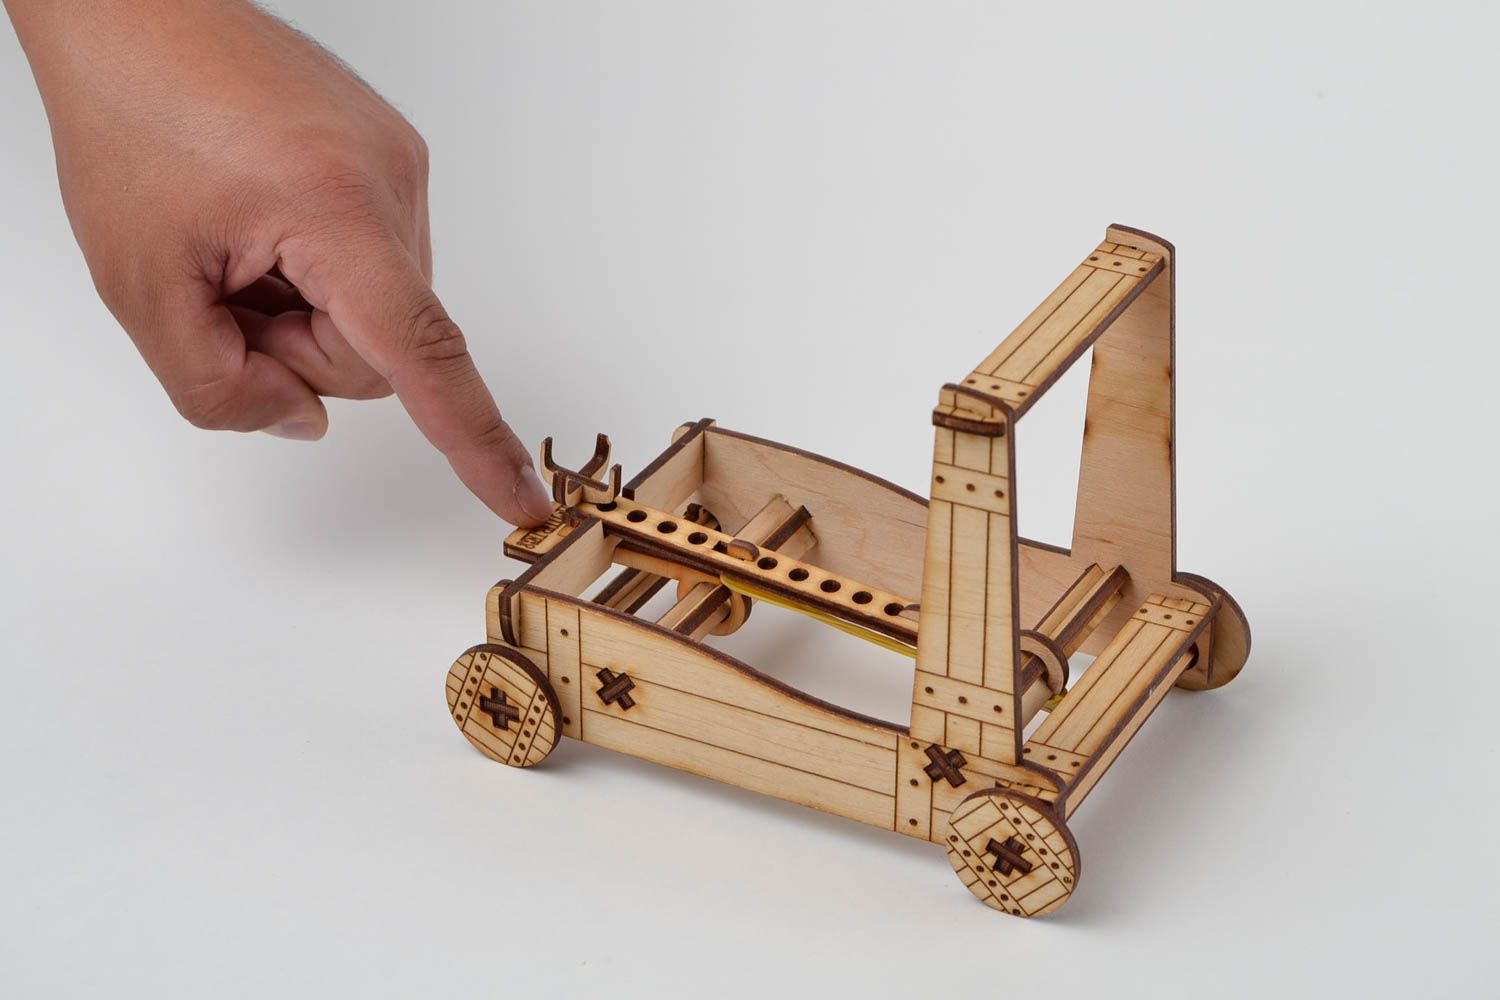 Handmade designer wooden souvenir stylish toy for kids blank for creativity photo 2